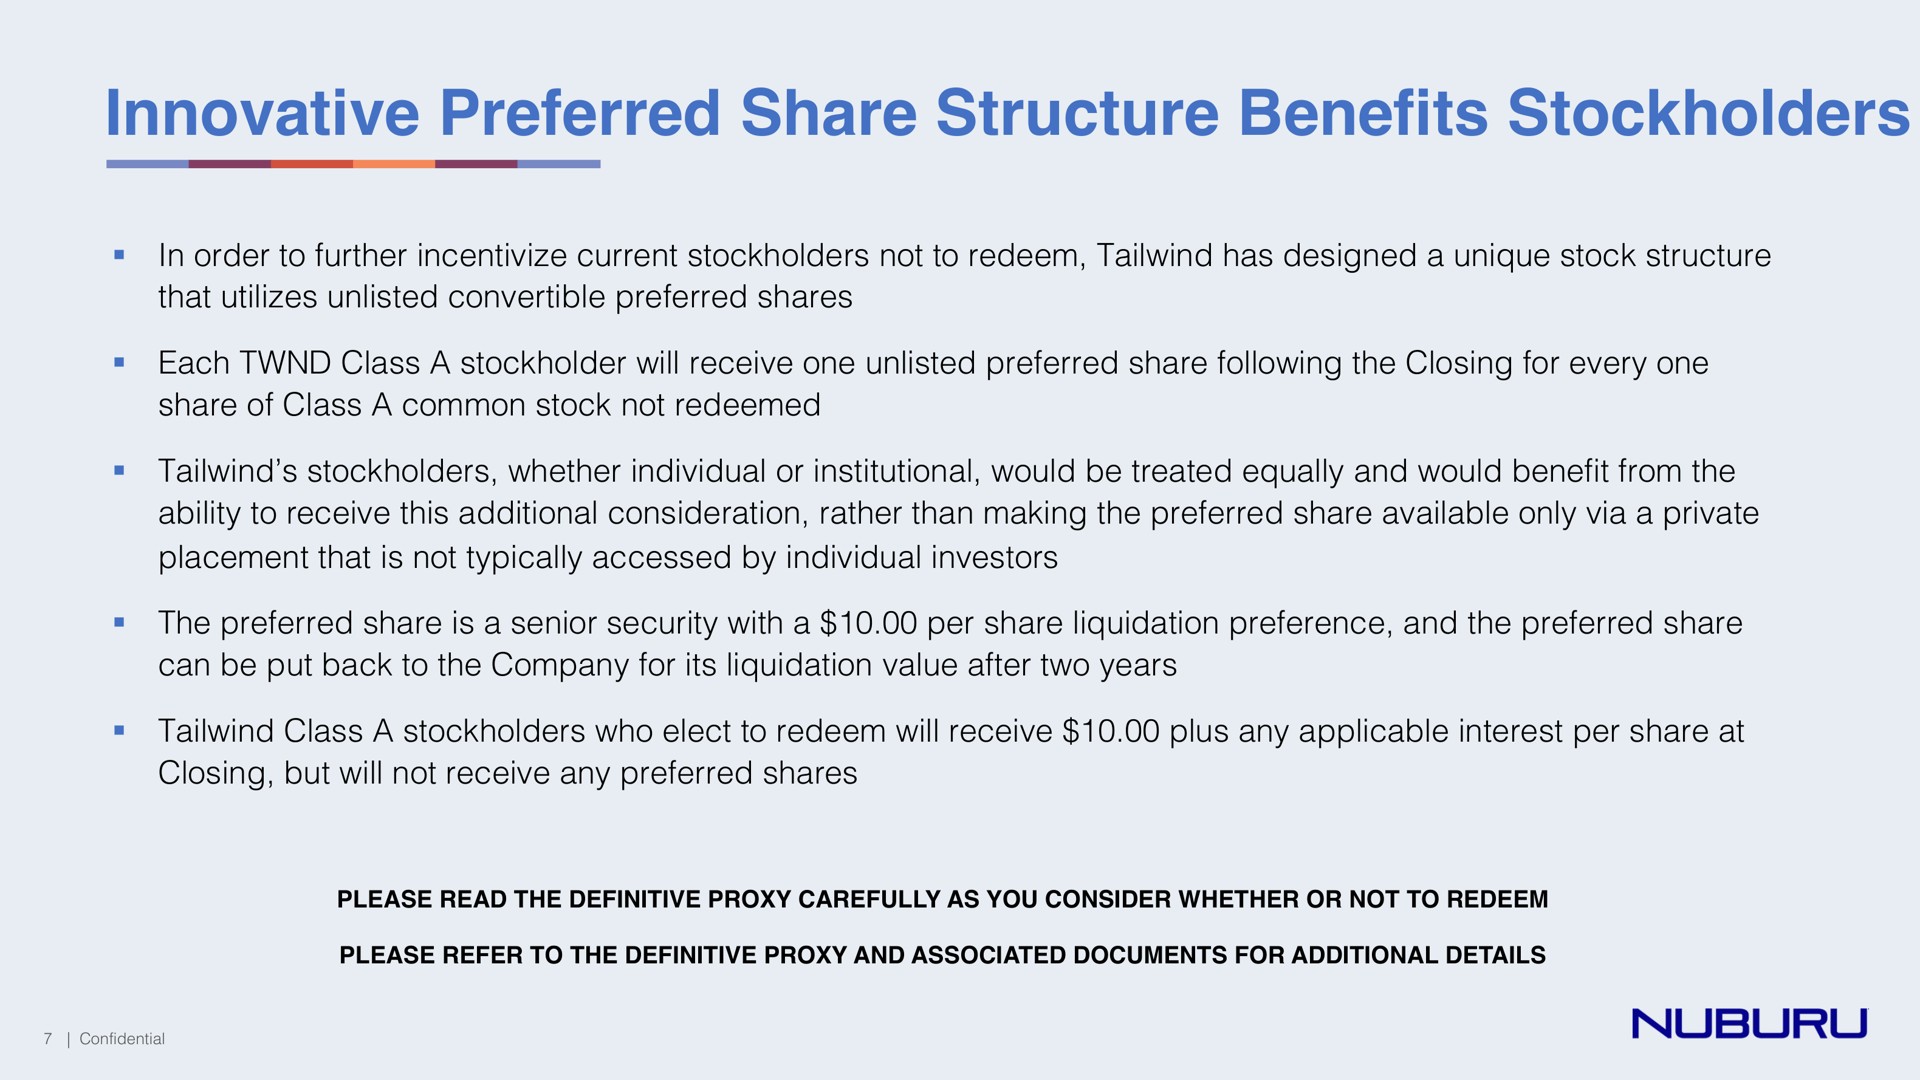 innovative preferred share structure benefits stockholders | NUBURU